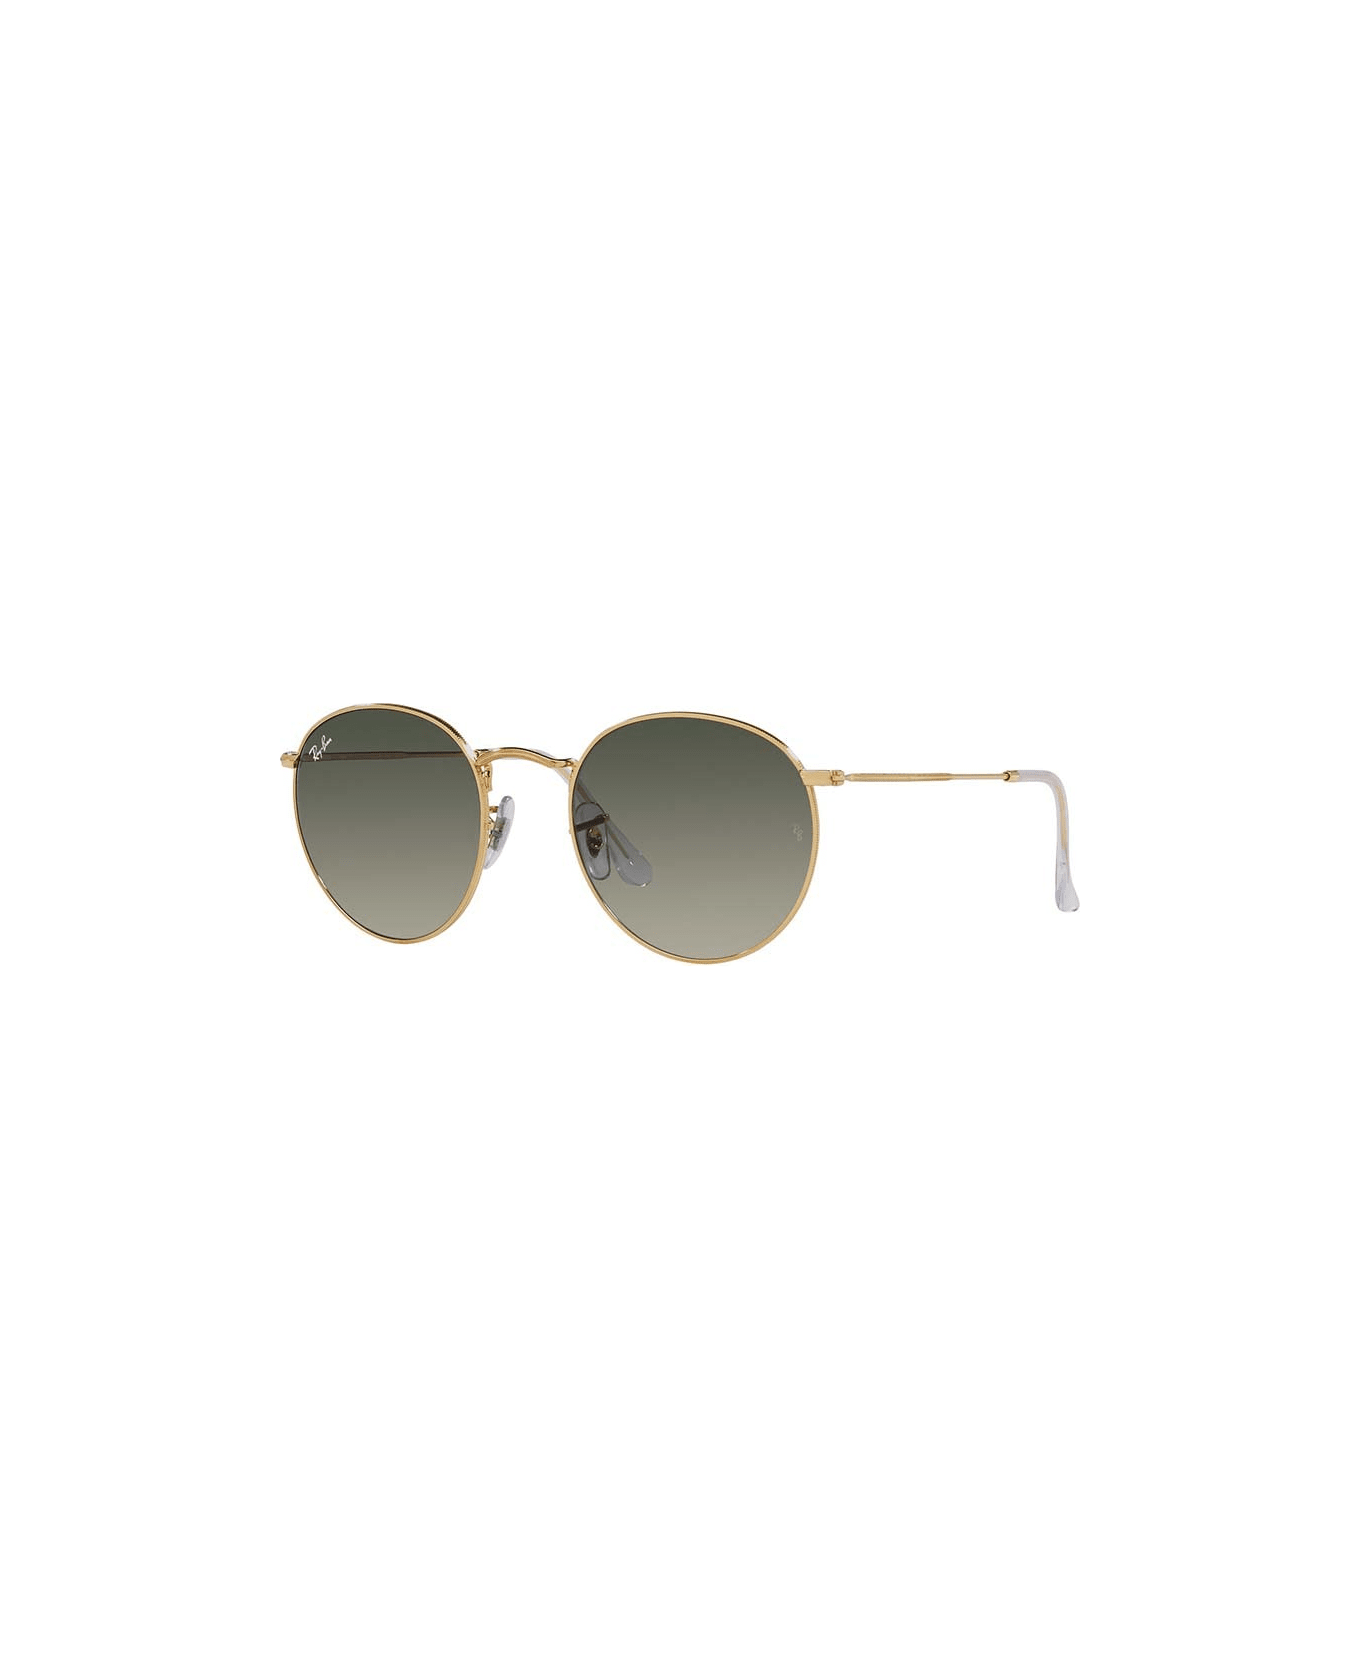 Ray-Ban Sunglasses - Oro/Grigio サングラス